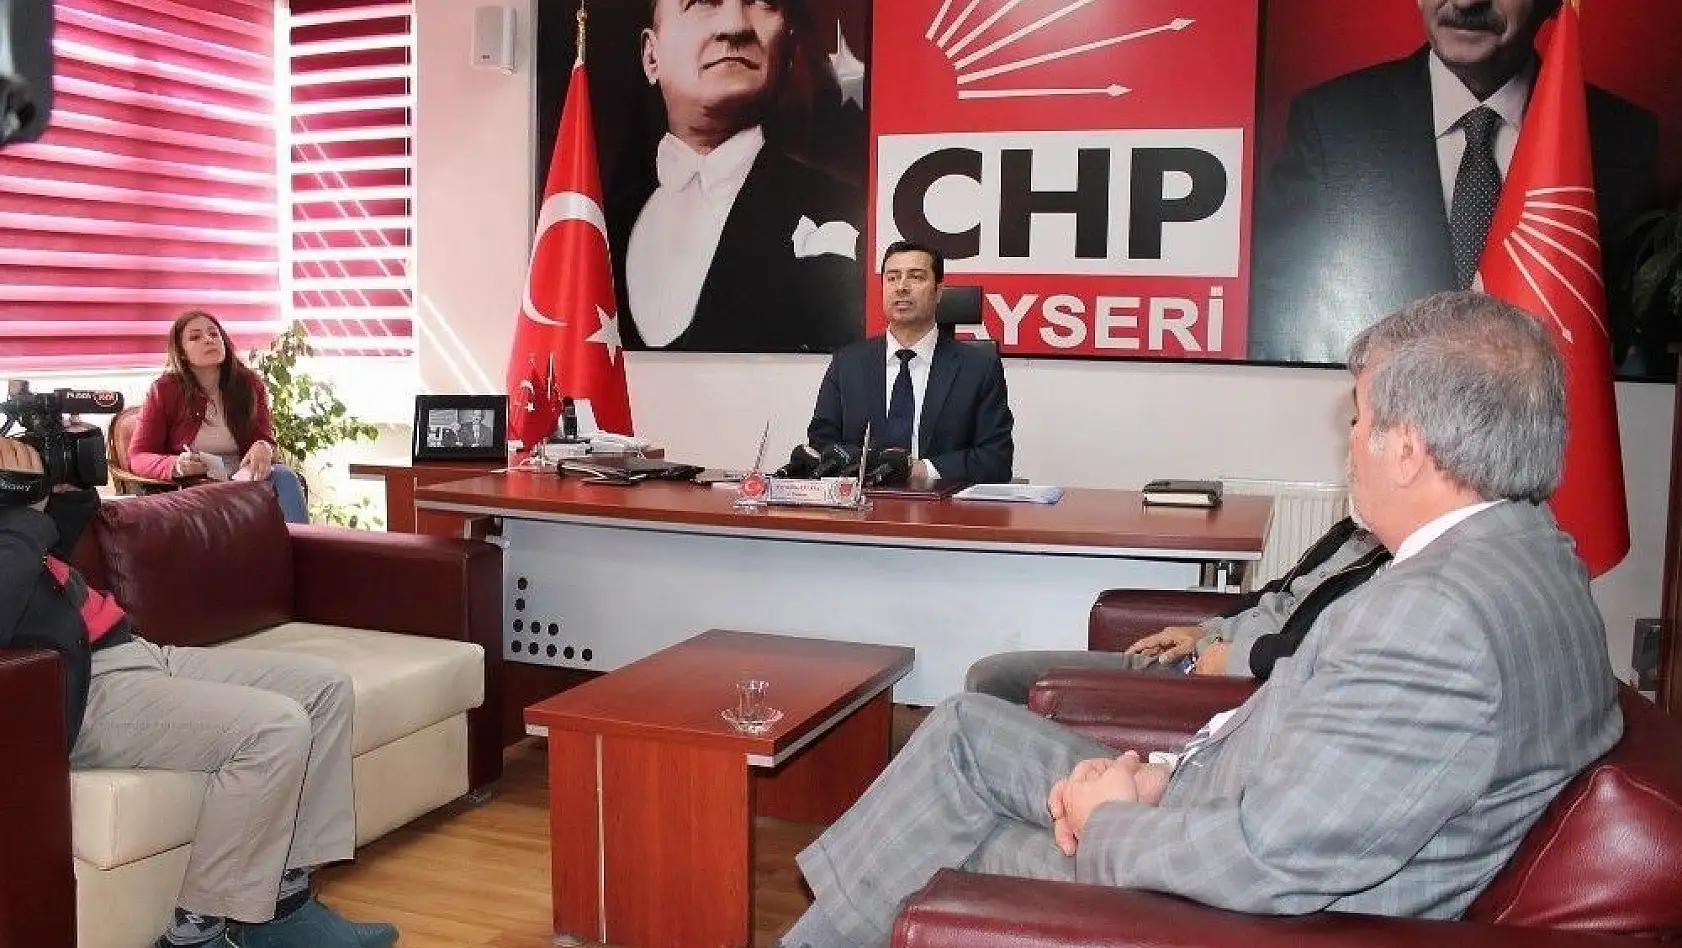 CHP İl Başkanı Feyzullah Keskin: